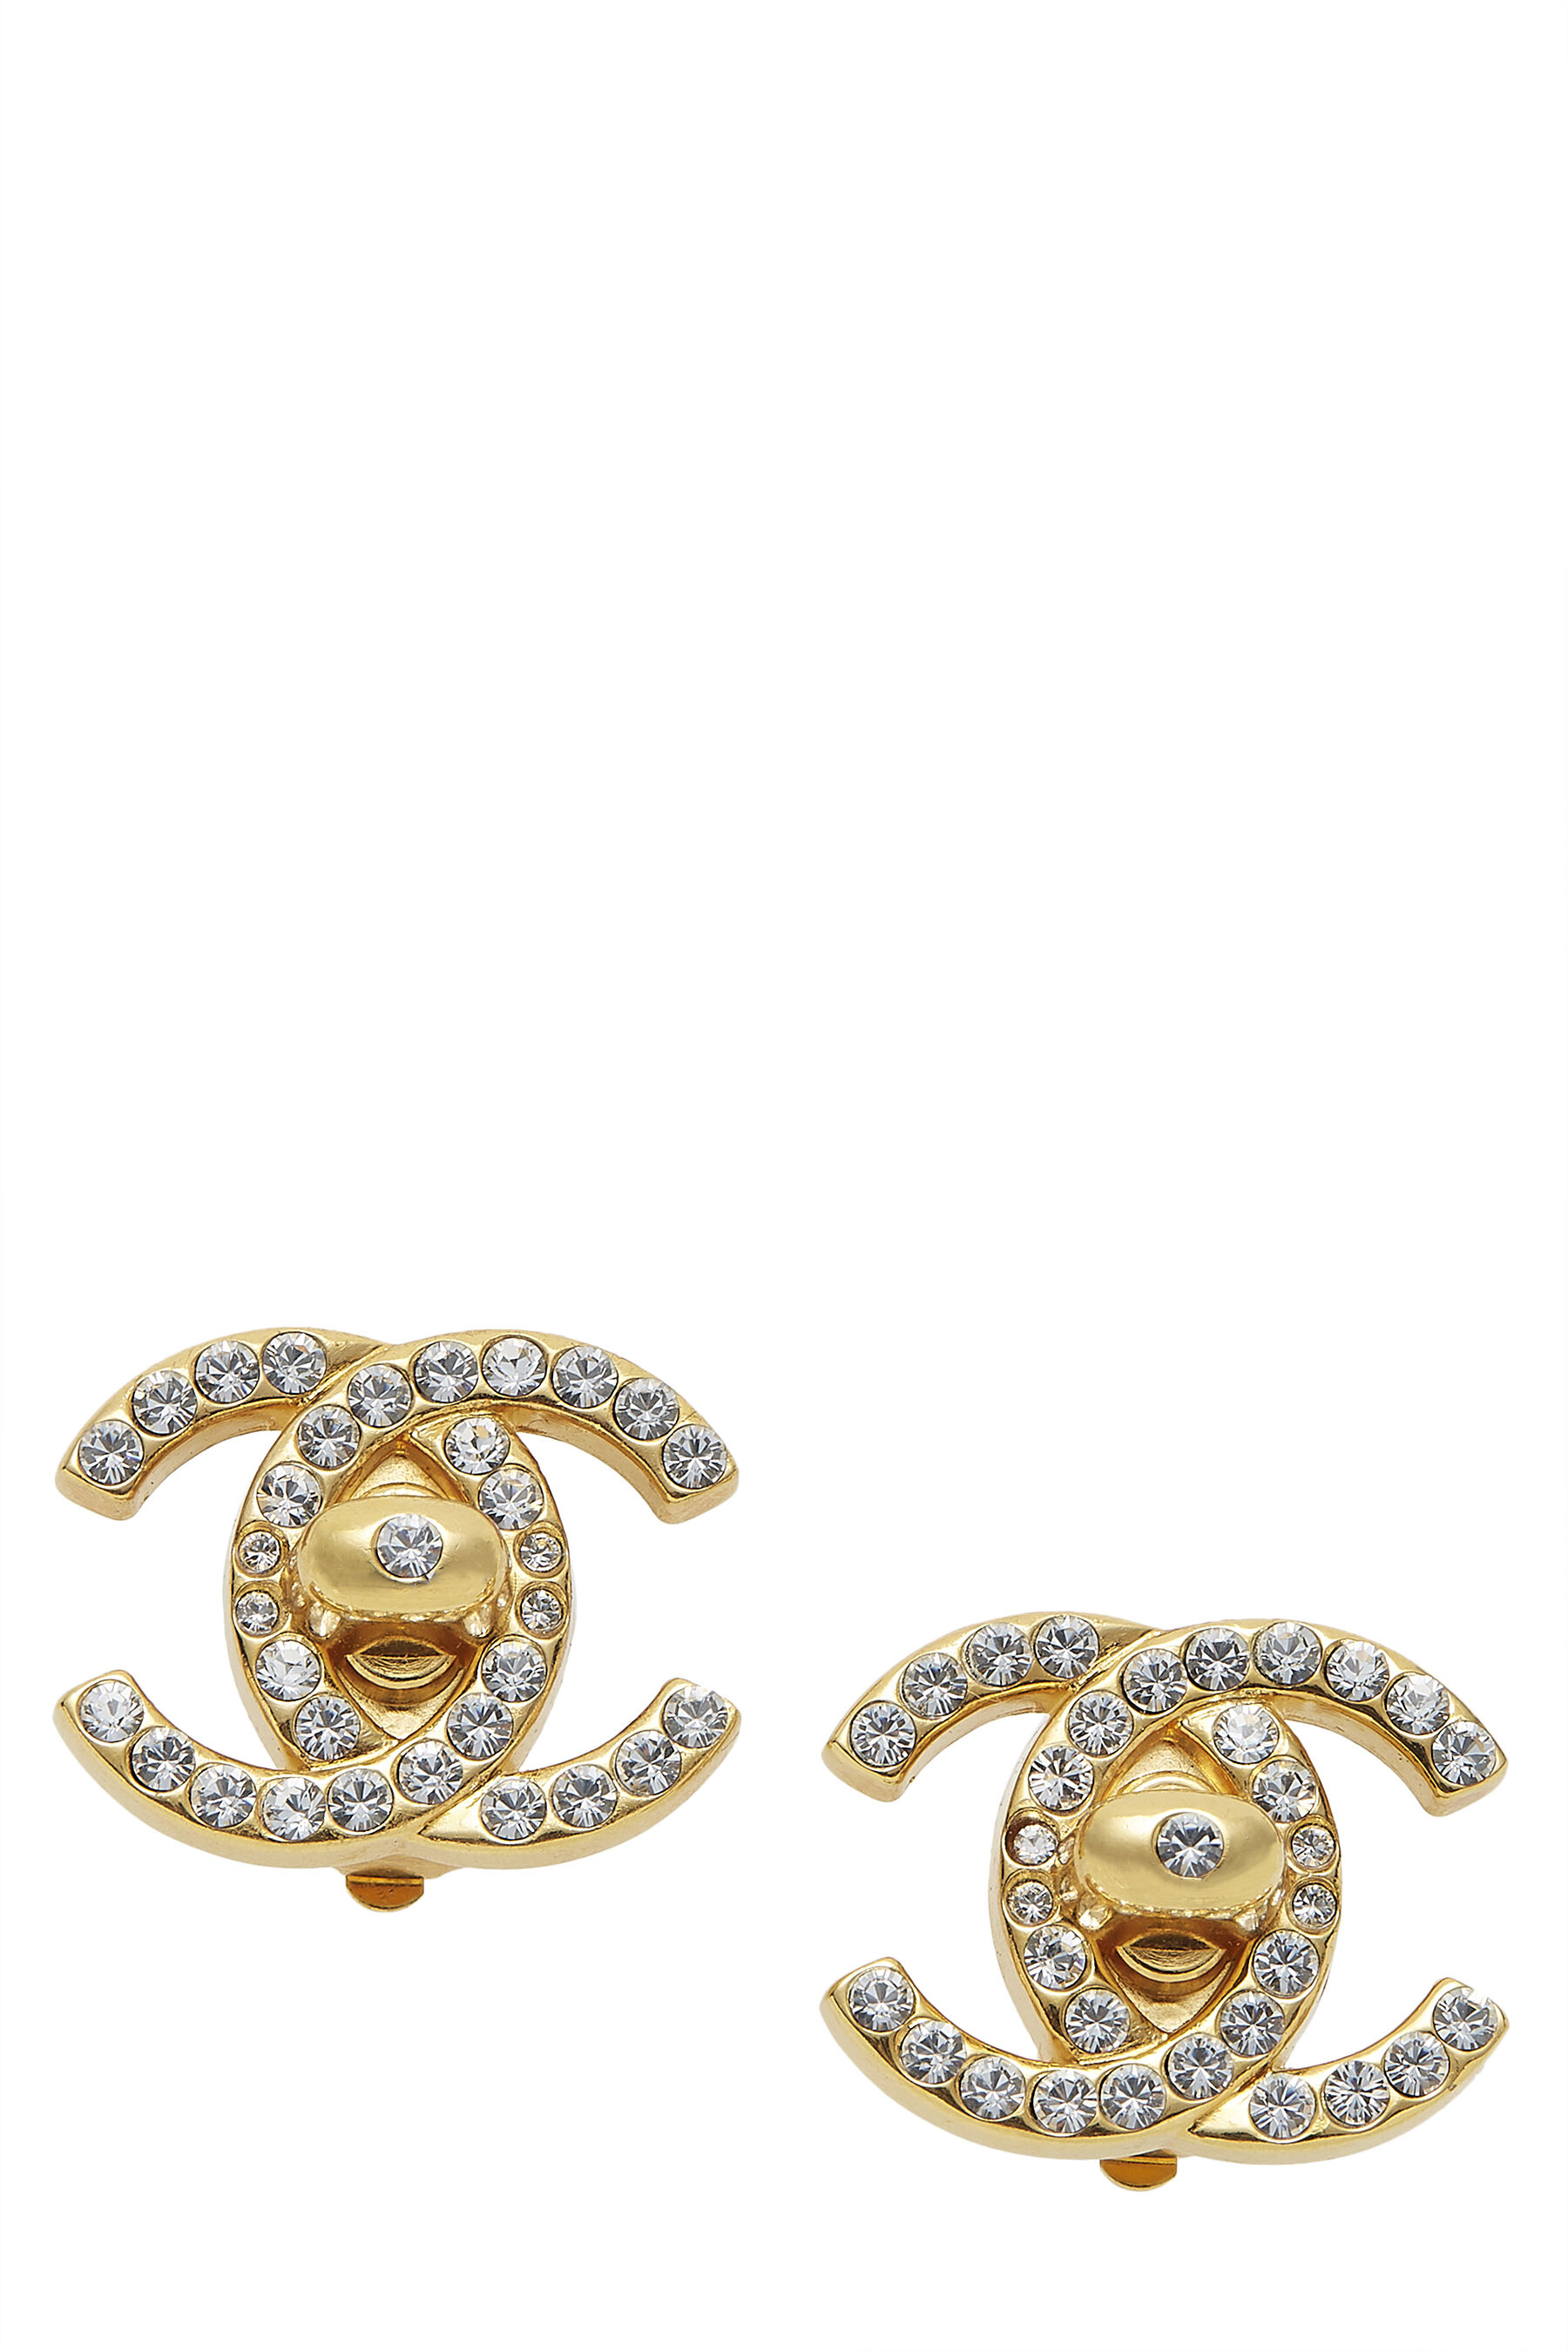 Chanel Gold & Crystal 'CC' Turnlock Earrings Medium Q6J0LE0RD7037